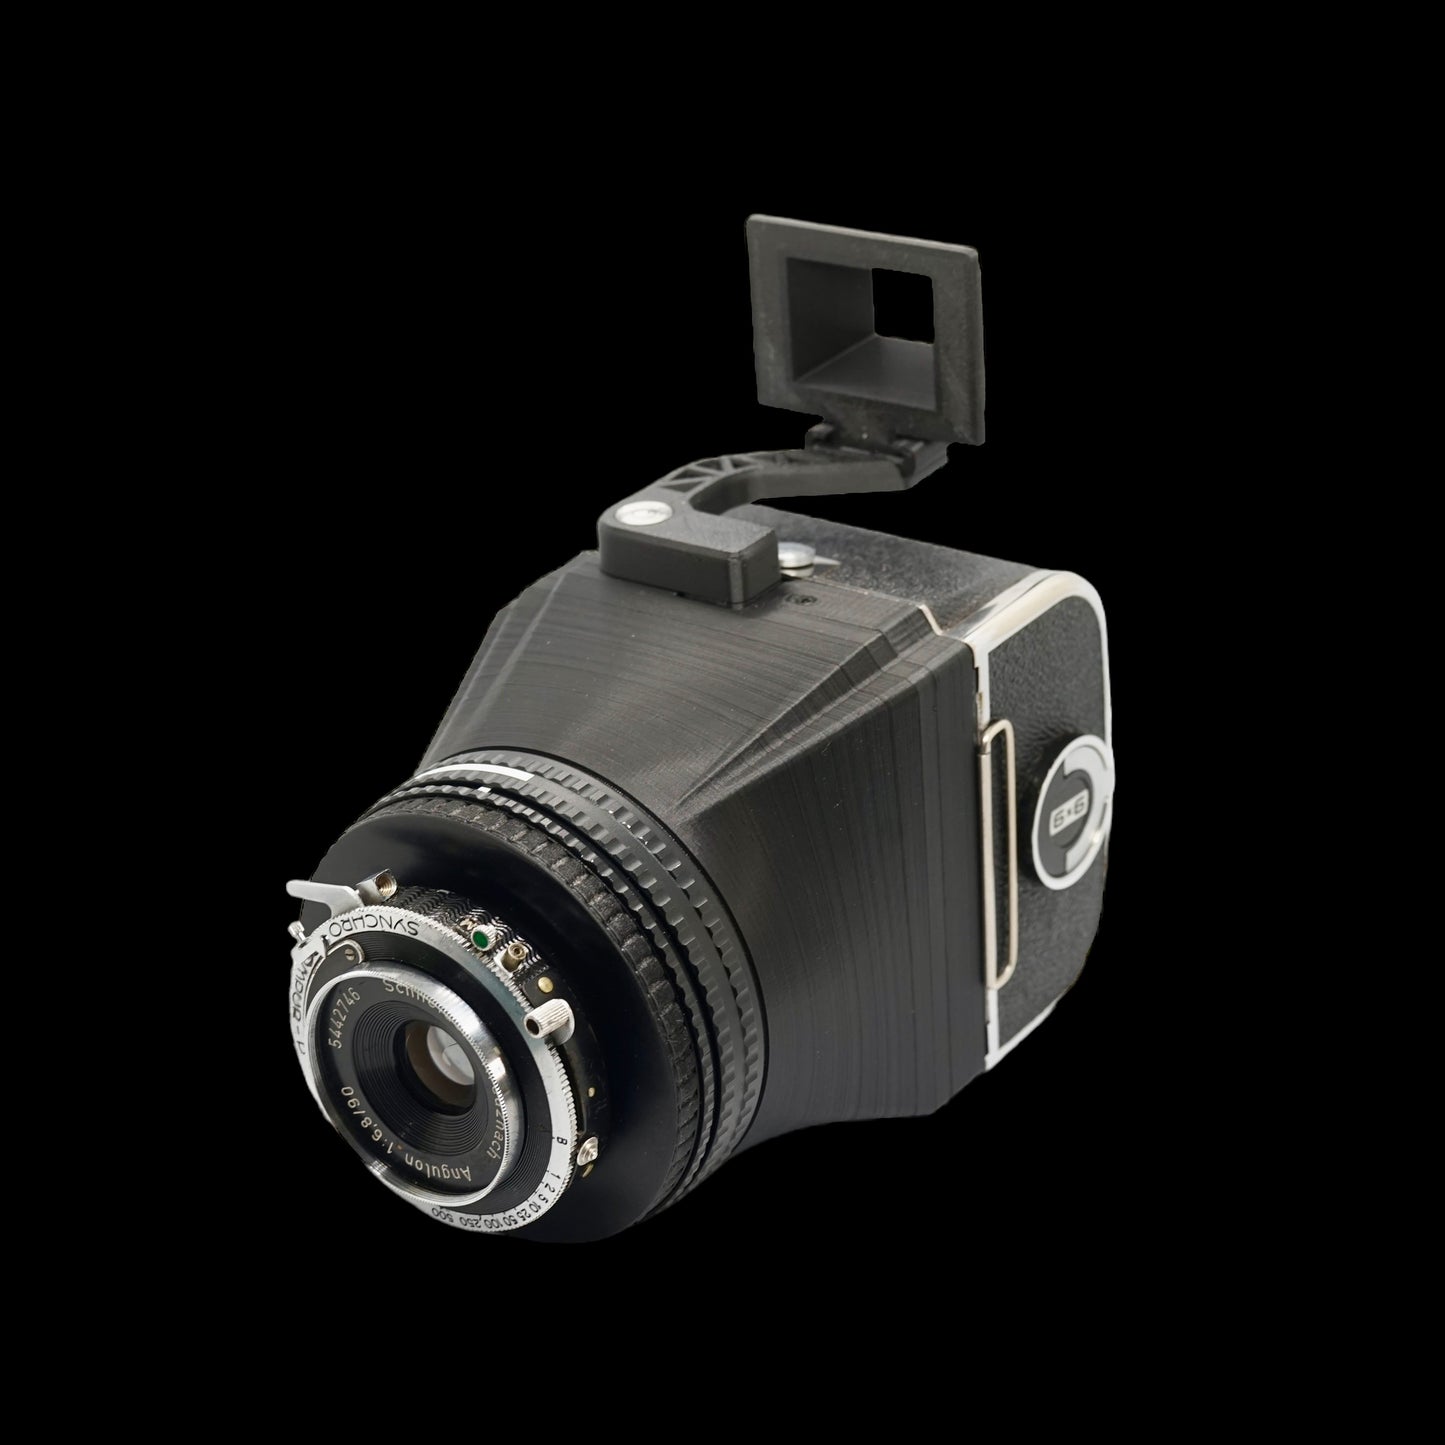 6x6 Medium Format System with Schneider 90mm F6.8 lens